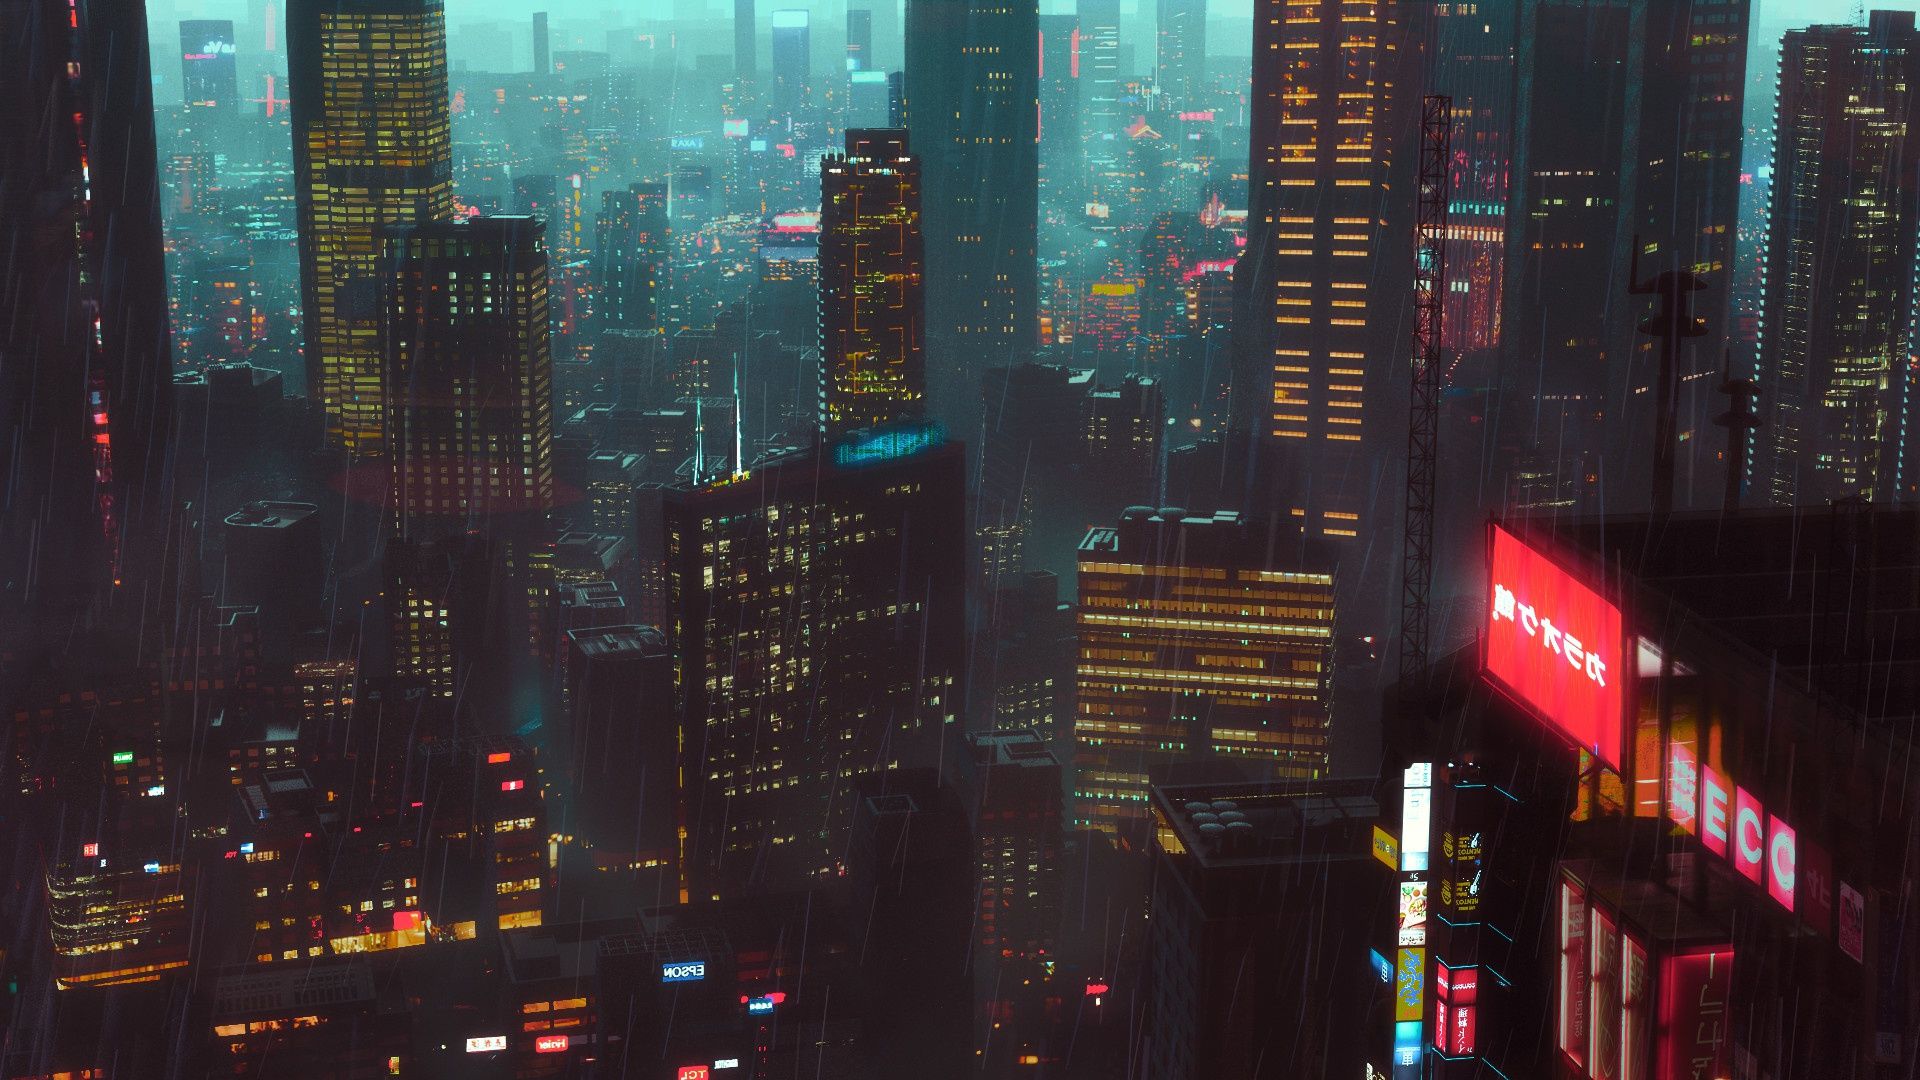 Cyberpunk City [1920x1080]